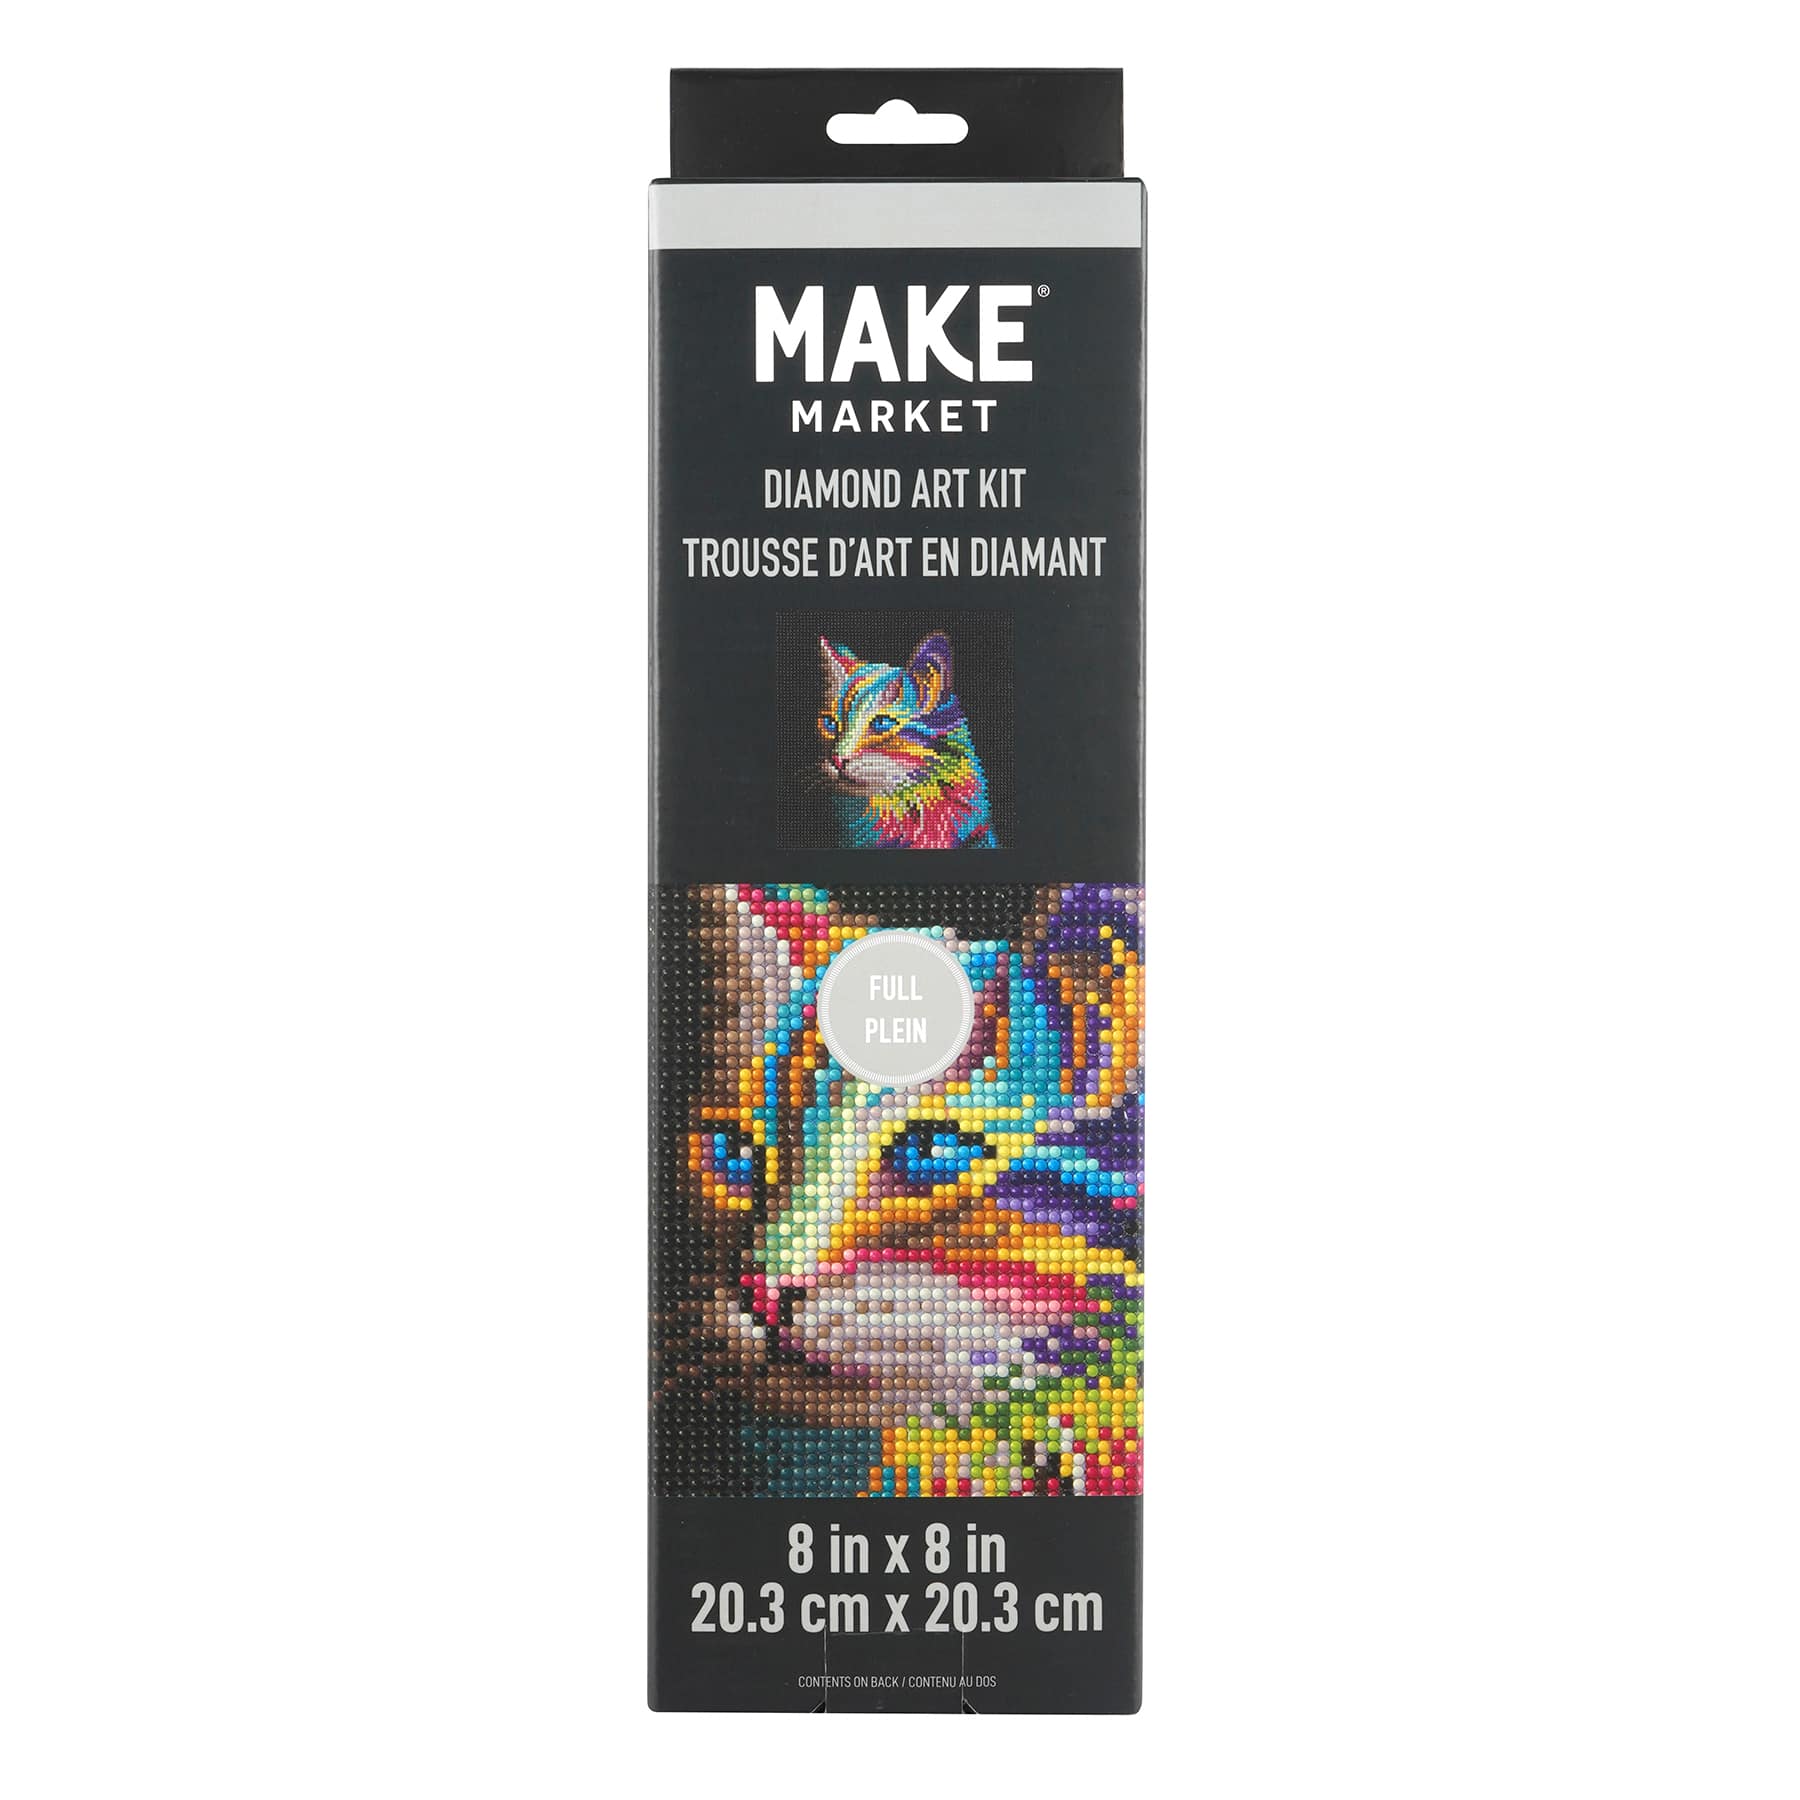 Make Market Duo Cat Diamond Art Kit - 11 x 14 in